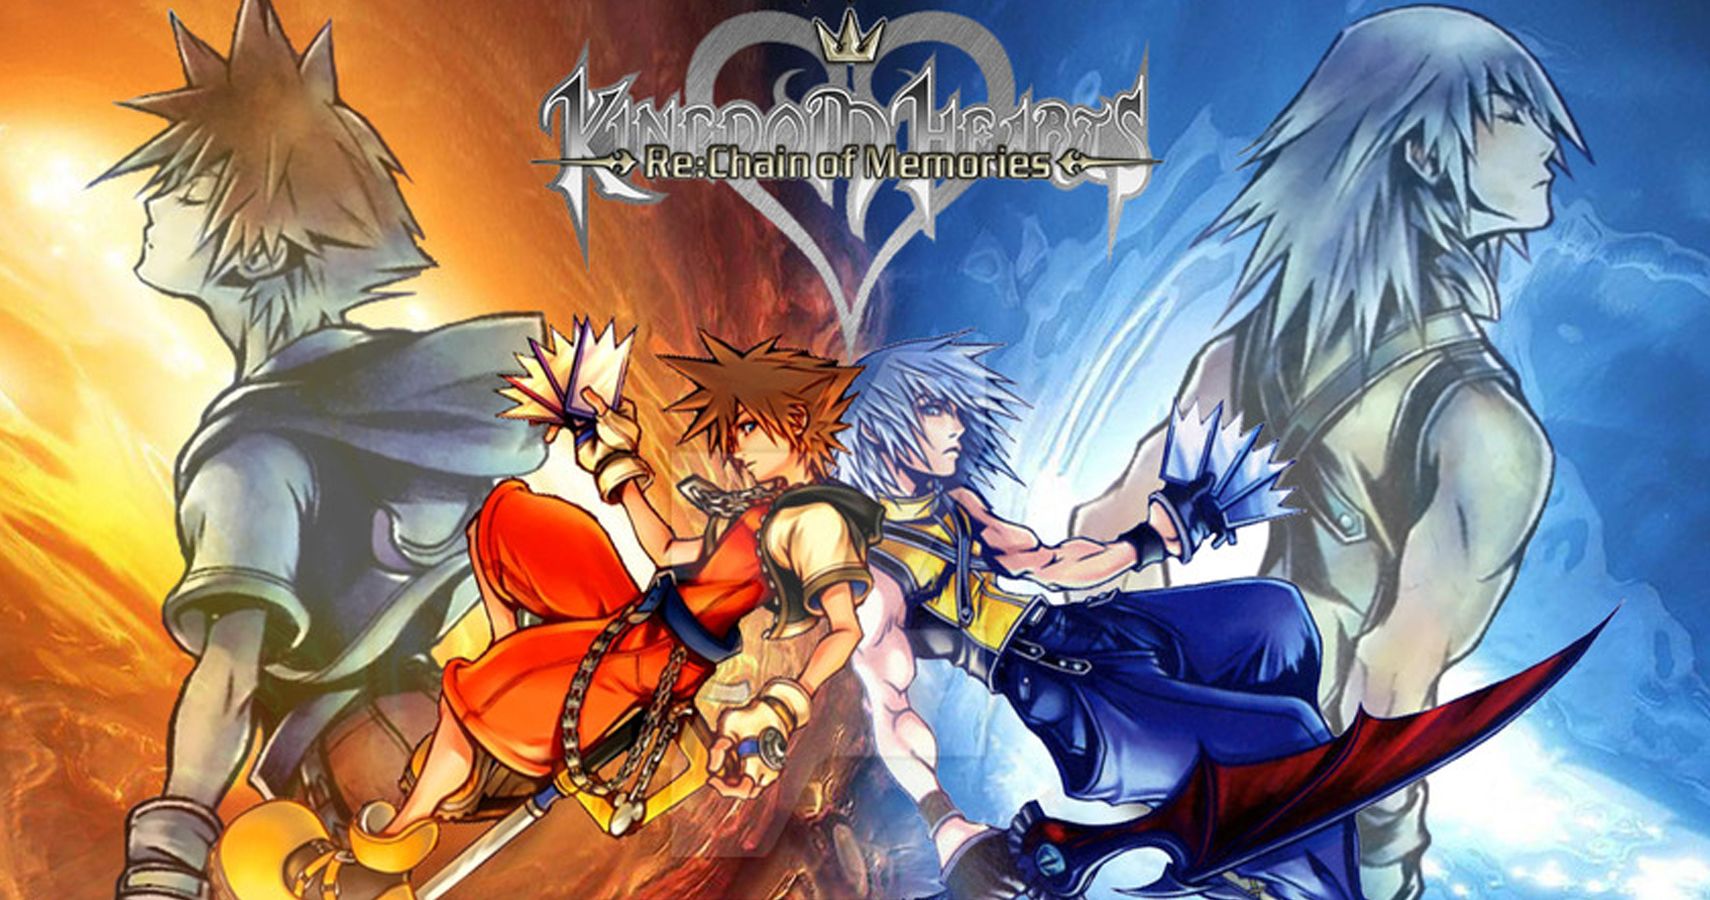 riku.jpg - Official Avatars - KH13 · for Kingdom Hearts